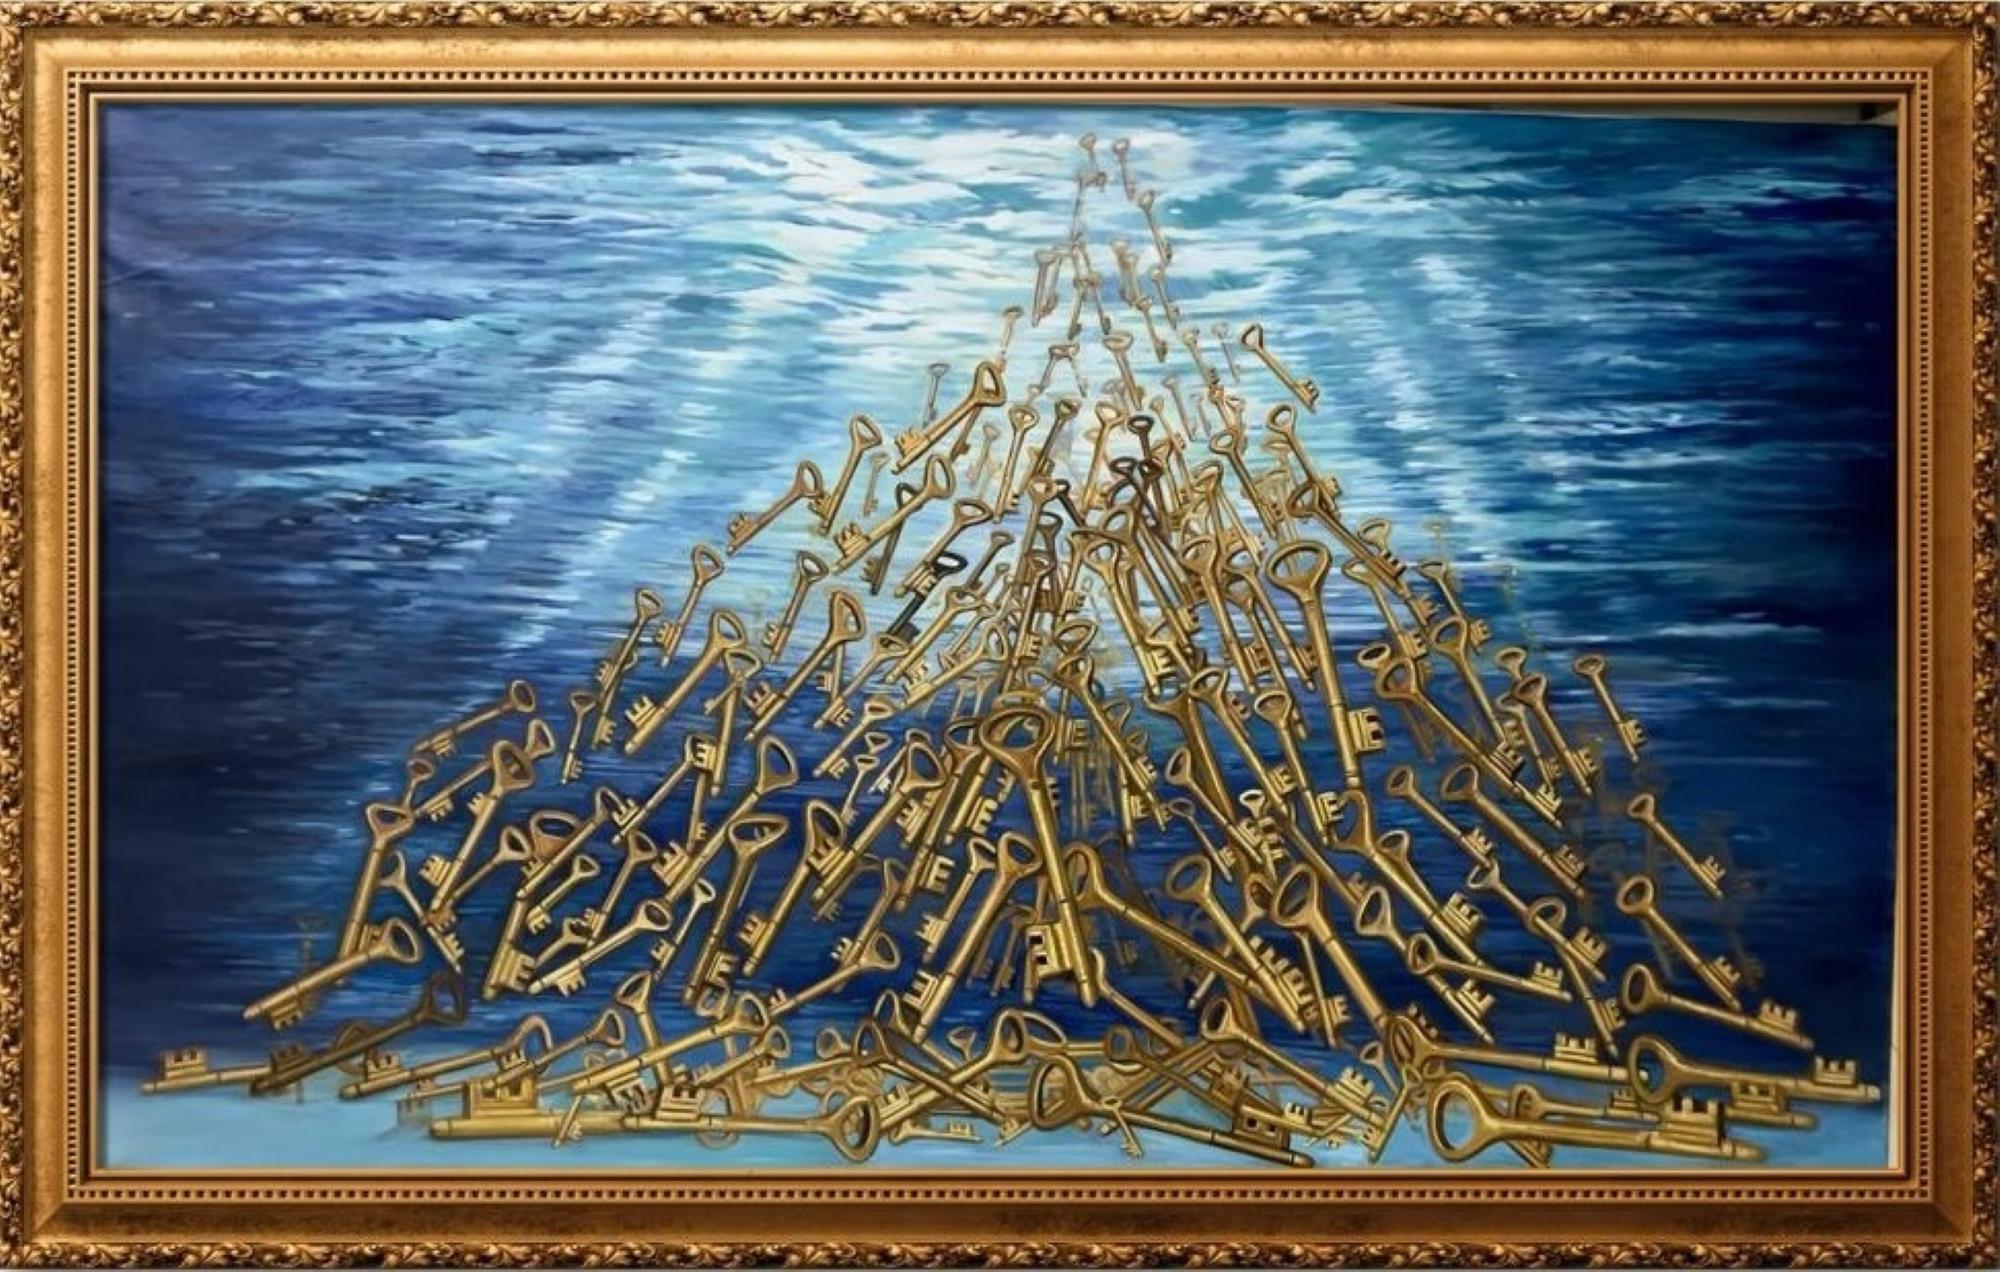 Keys sound in the ocean - Painting by HANI NAJI